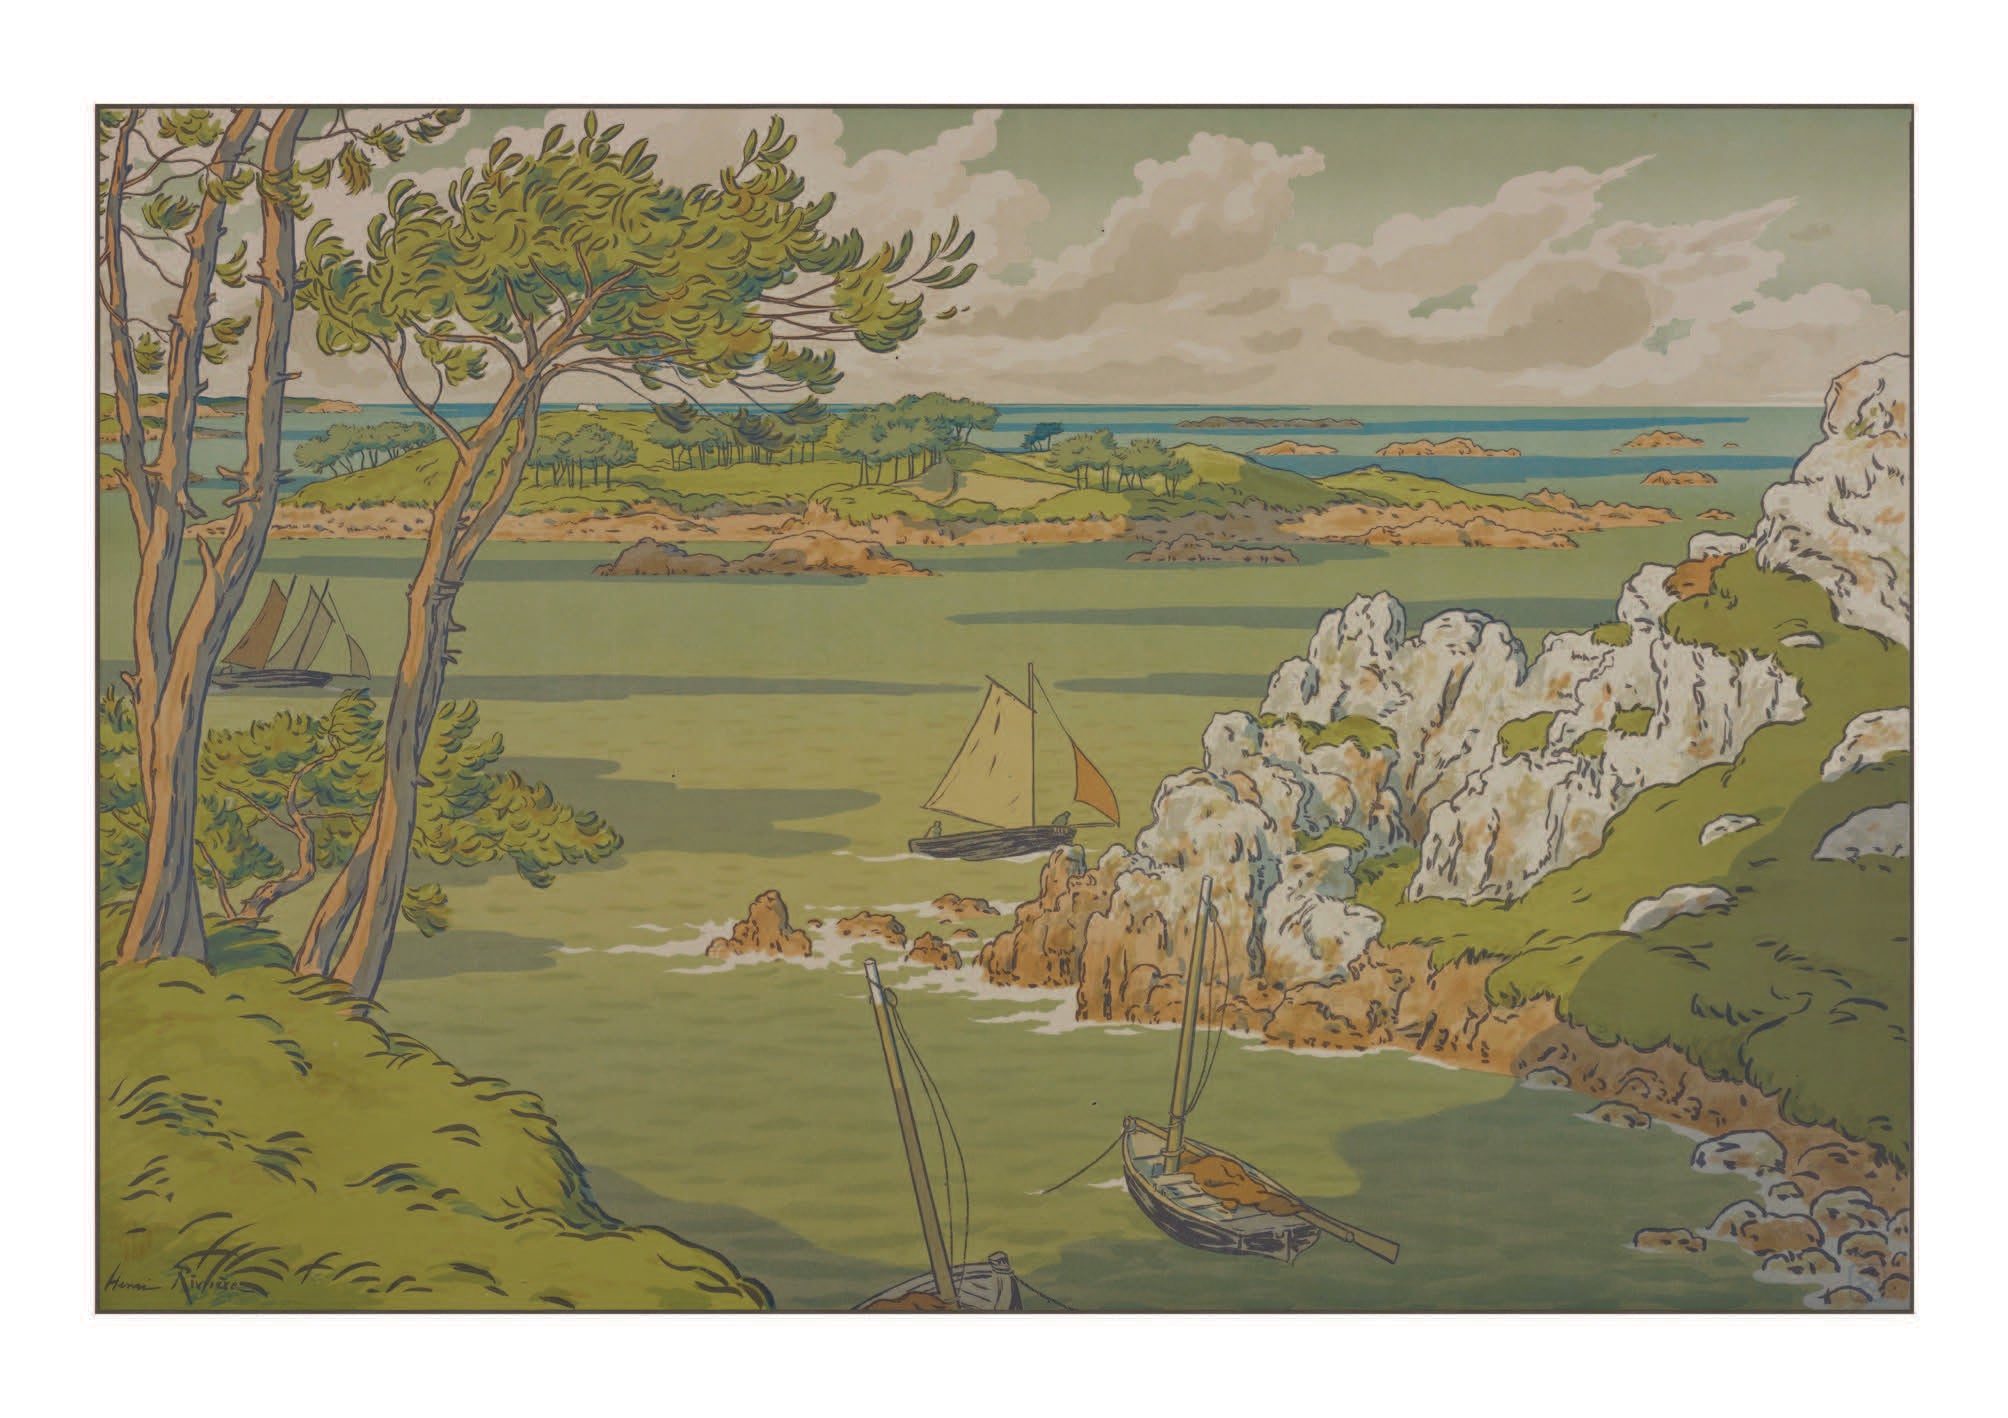 Henri Riviere carte postale l'Ile des Aspects de la Nature. Marque Bretagne. Travel poster decoration Bretagne